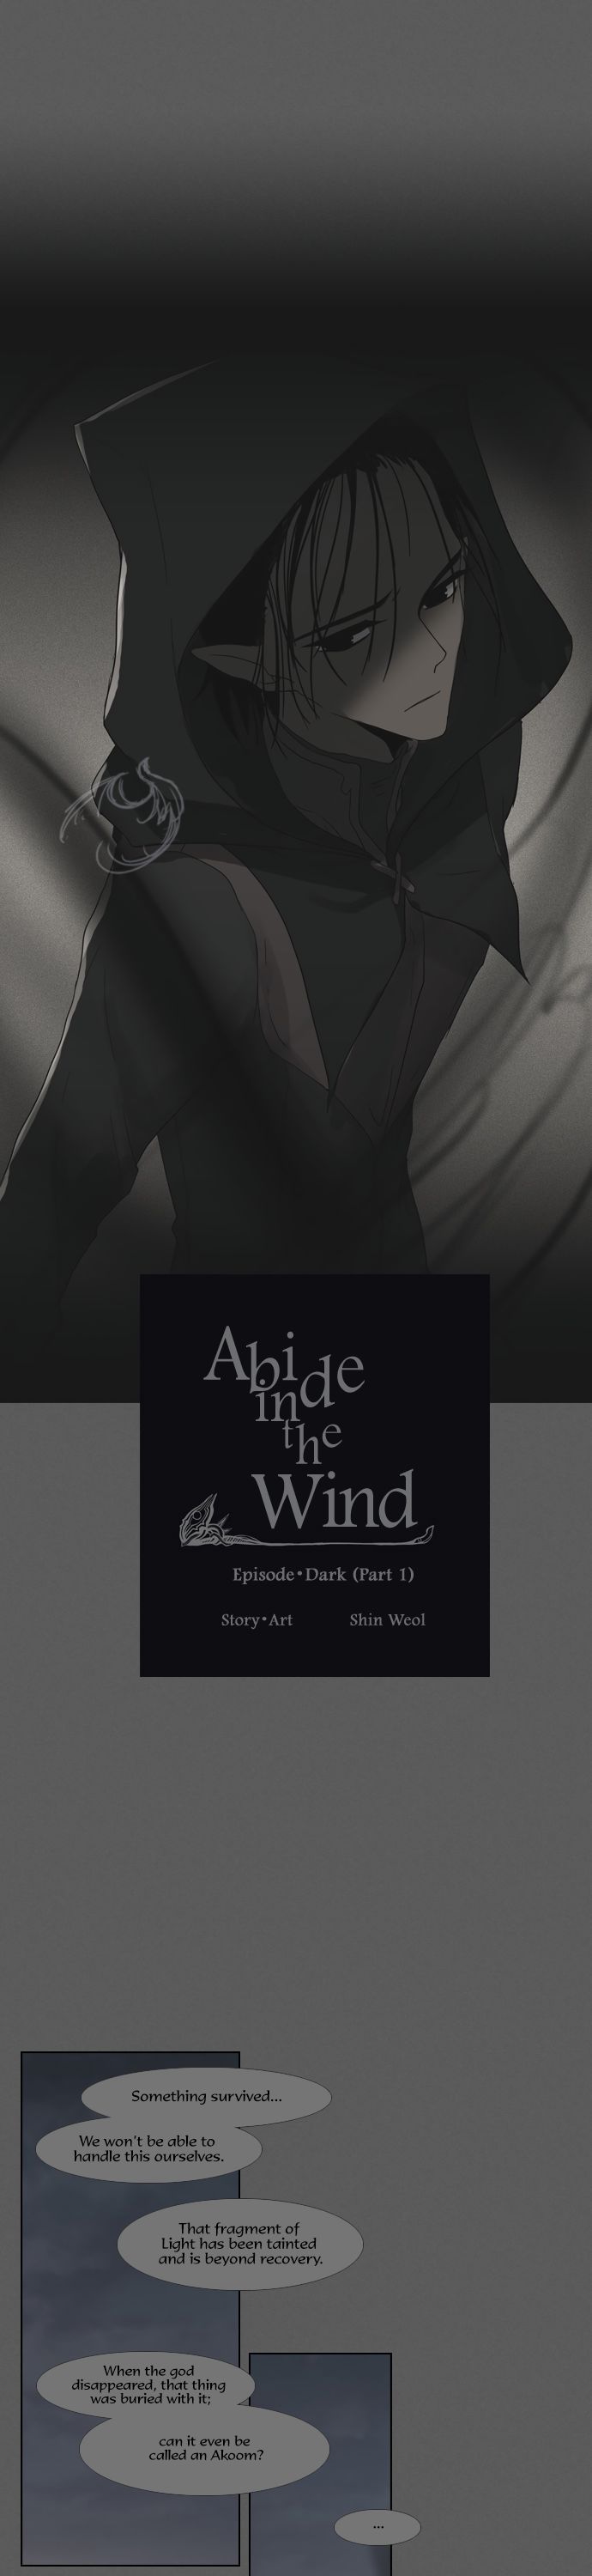 Abide in the Wind 134